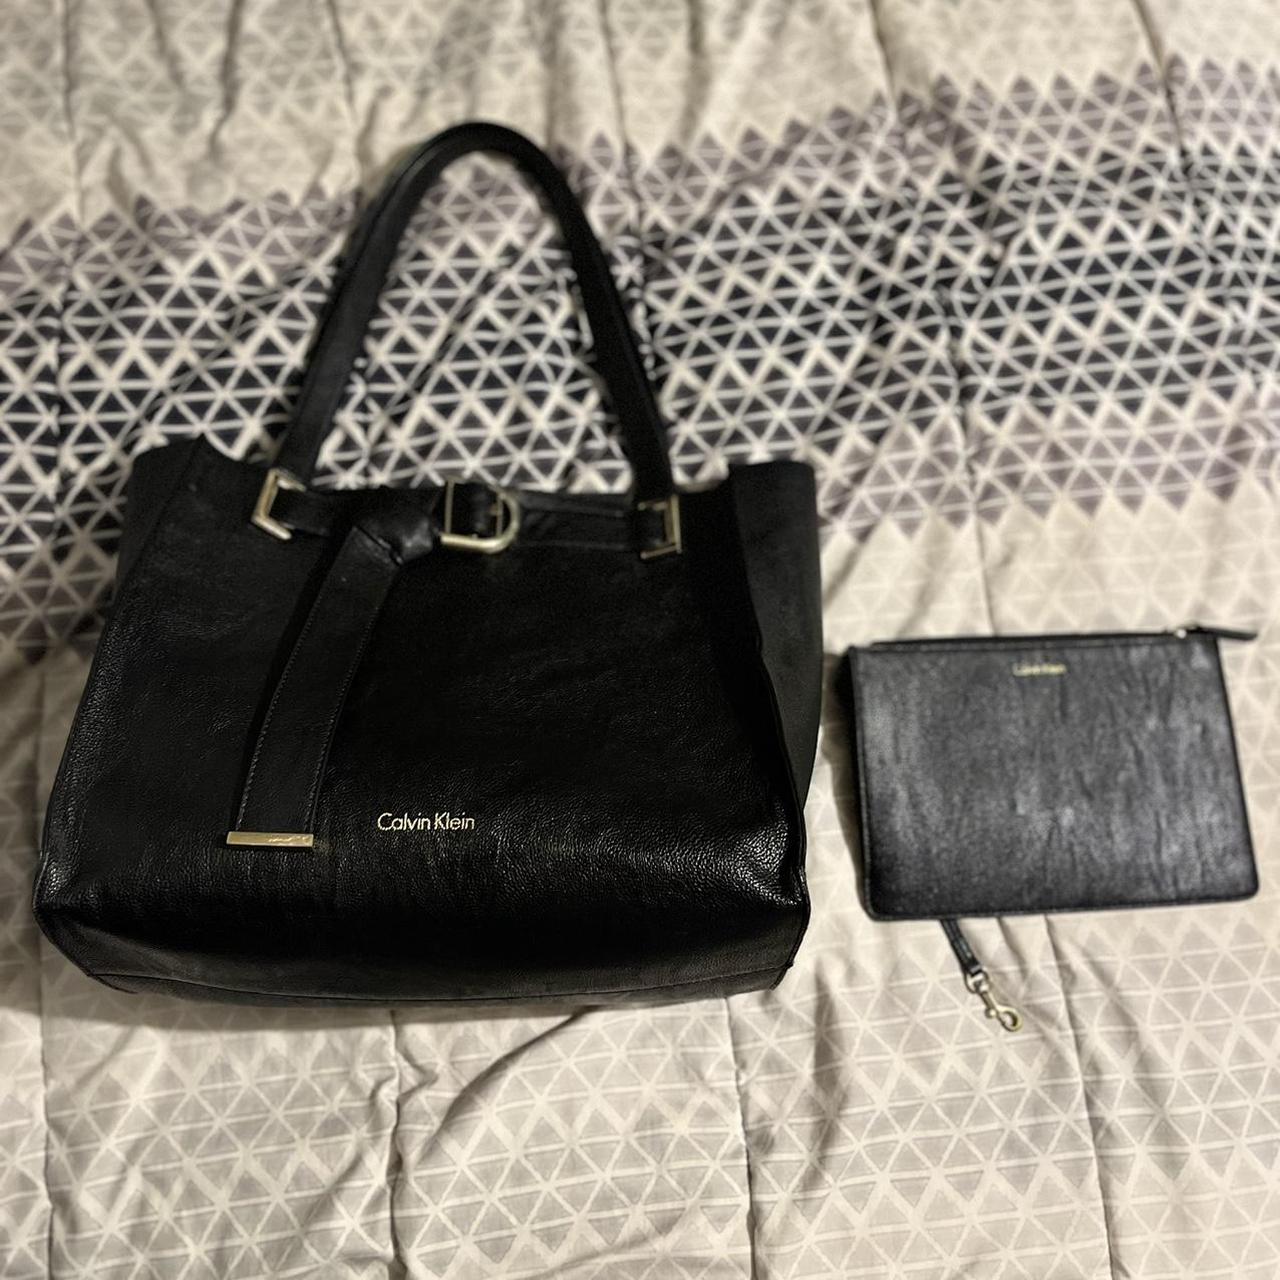 Calvin Klein Purse Black Leather Iris Top Handle Satchel Handbag | eBay